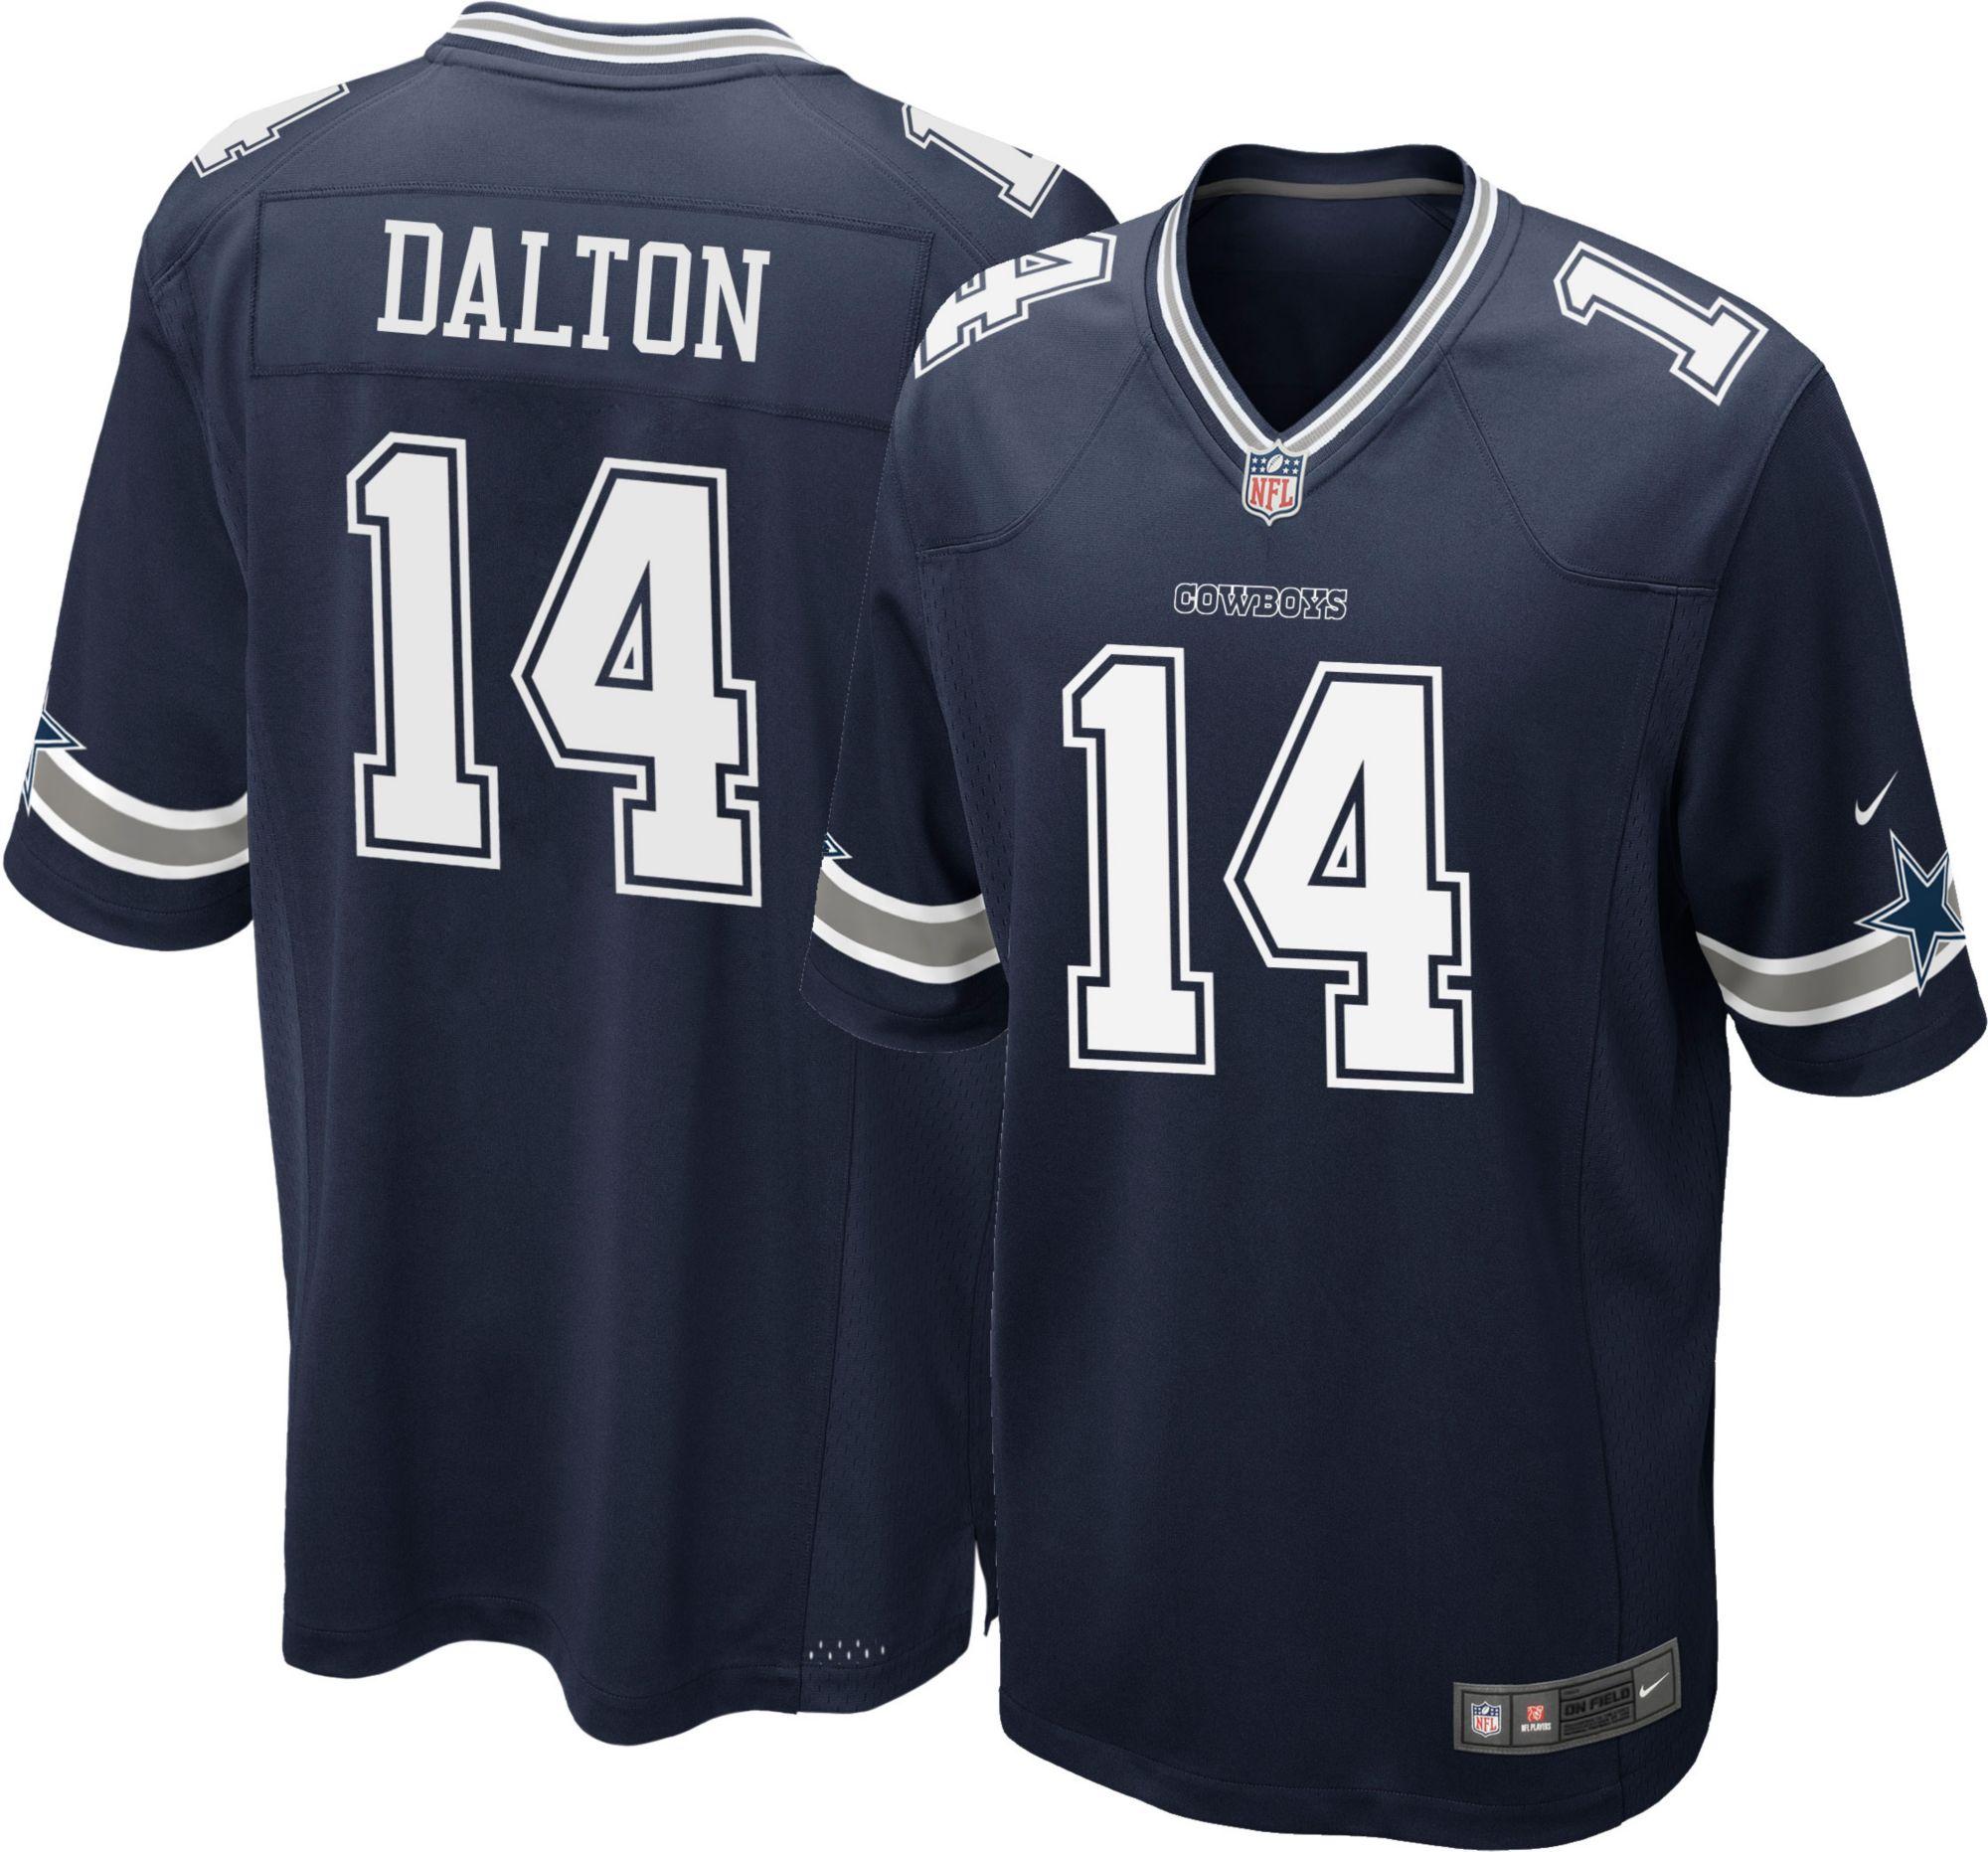 Nike Satin Dallas Cowboys Andy Dalton 14 Home Navy Game Jersey in Blue